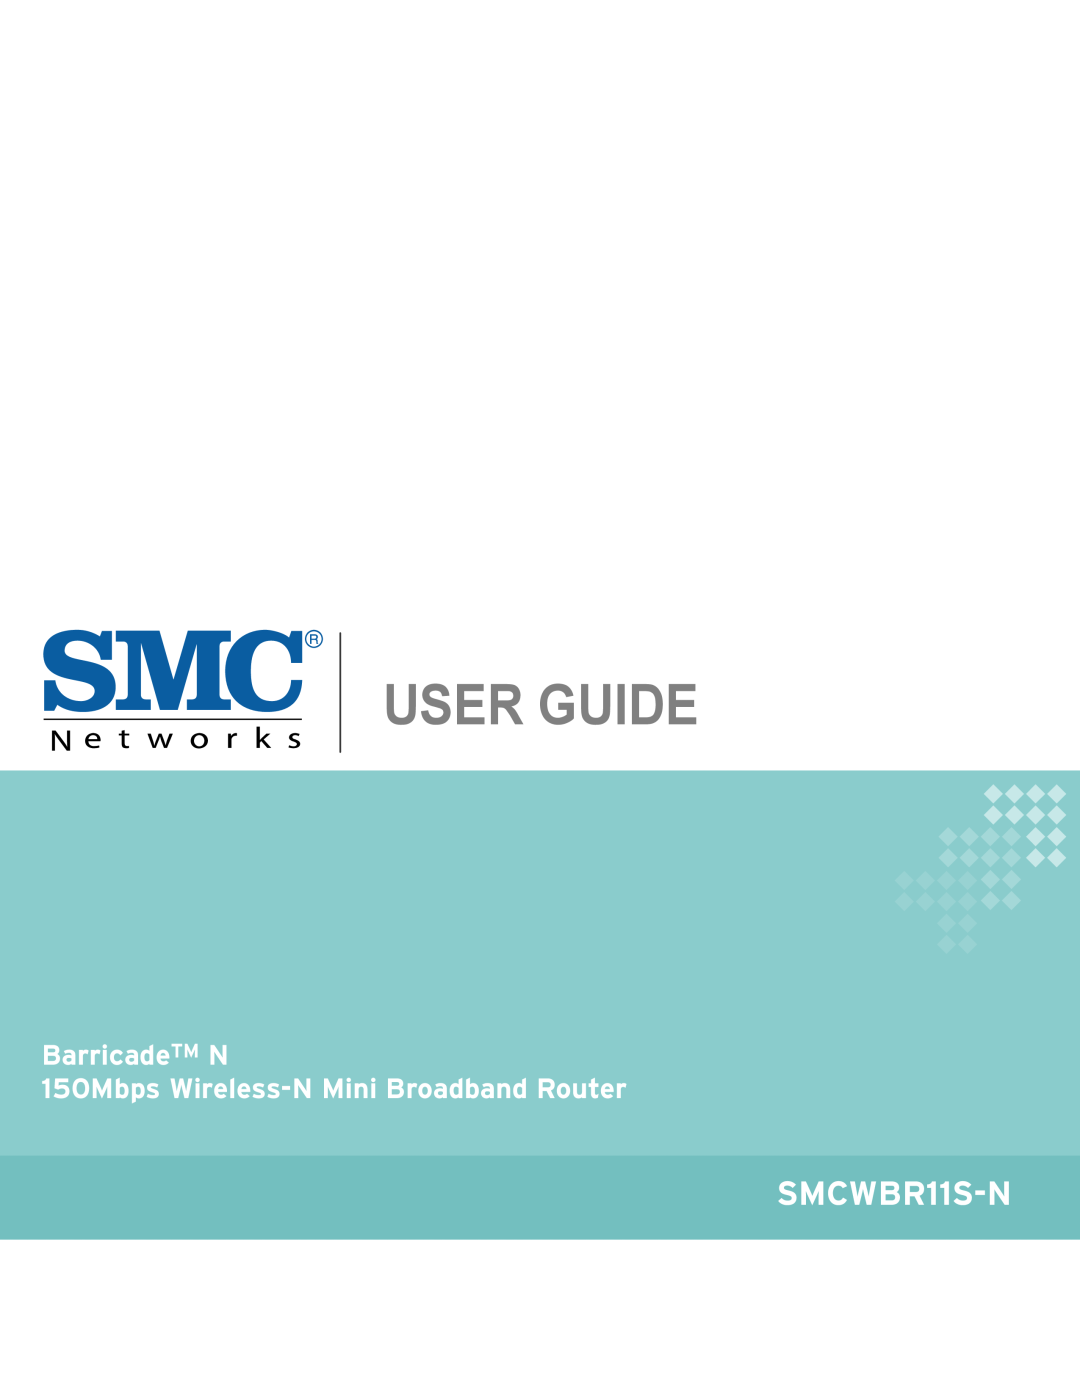 SMC Networks SMCWBR11S-N manual User Guide, BarricadeTM N 150Mbps Wireless-N Mini Broadband Router 